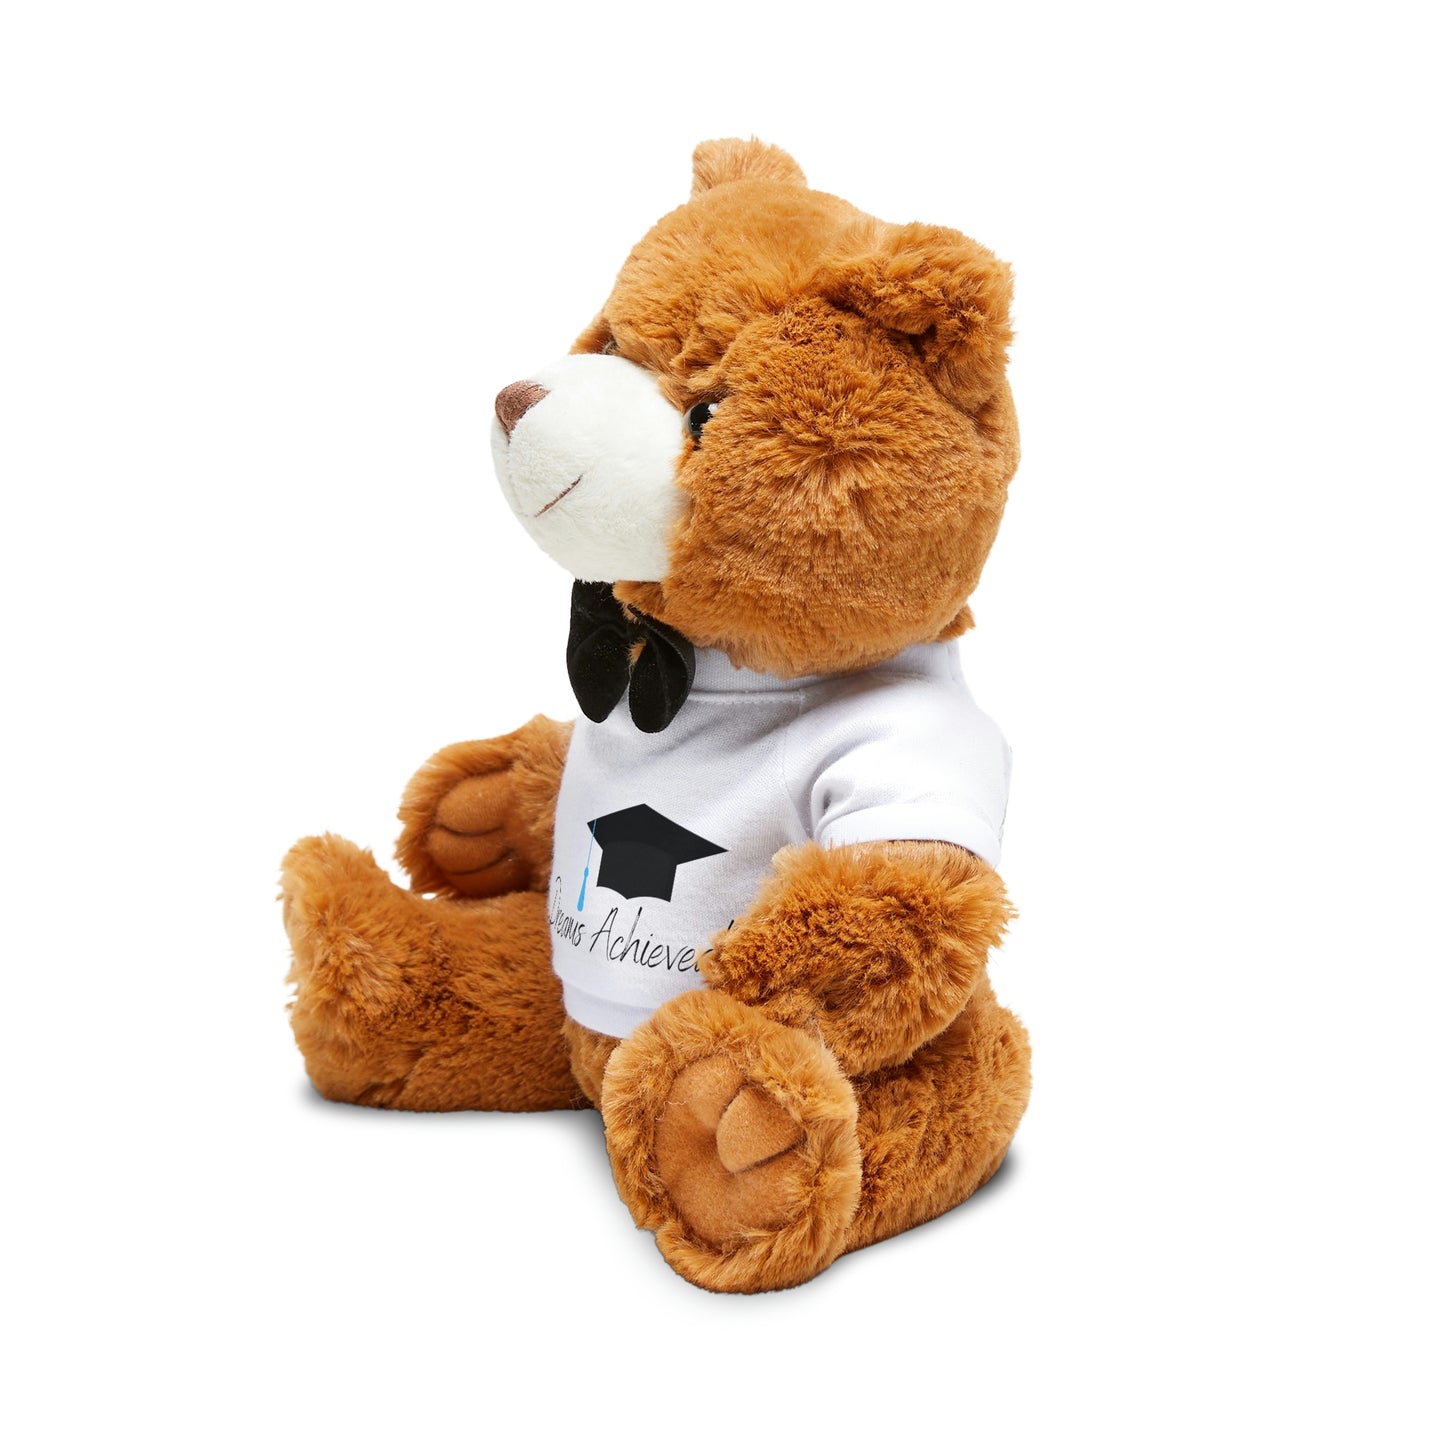 Dreams Achieved Teddy Bear